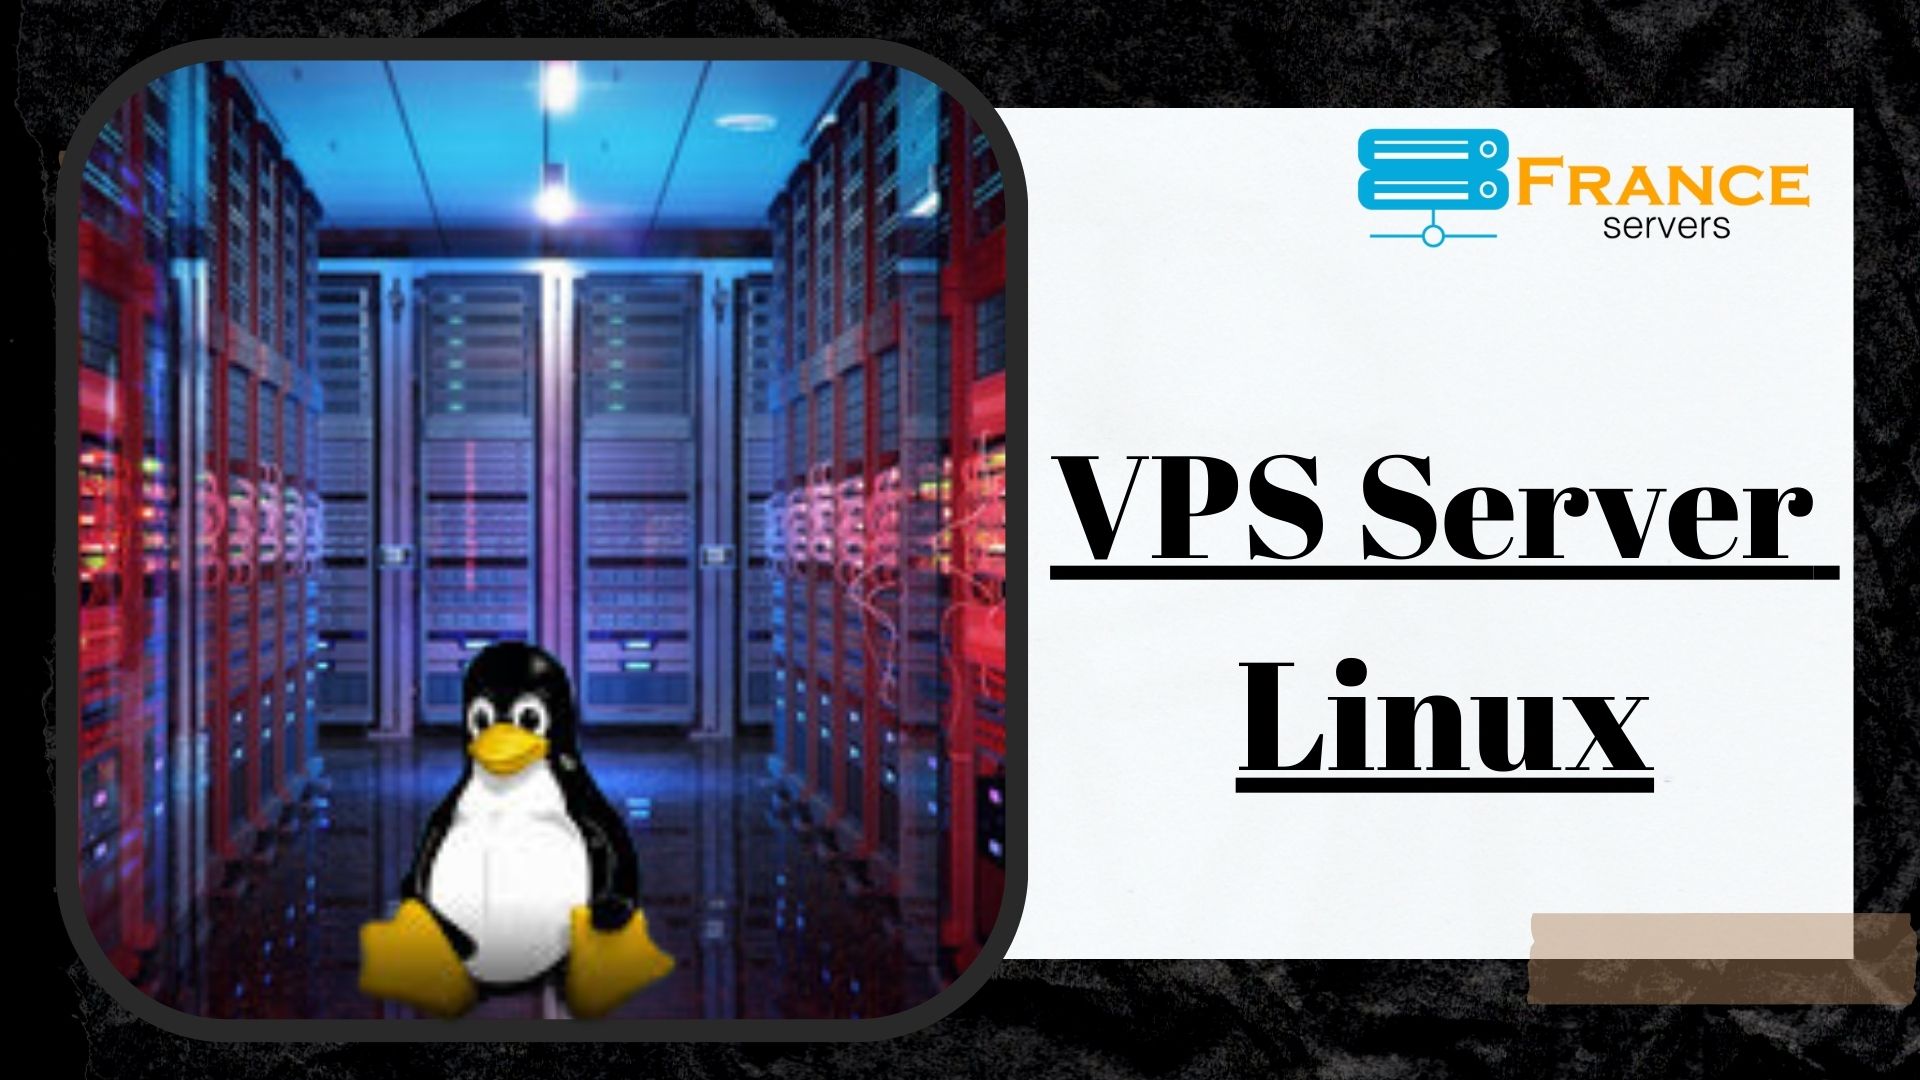 VPS Server Linux